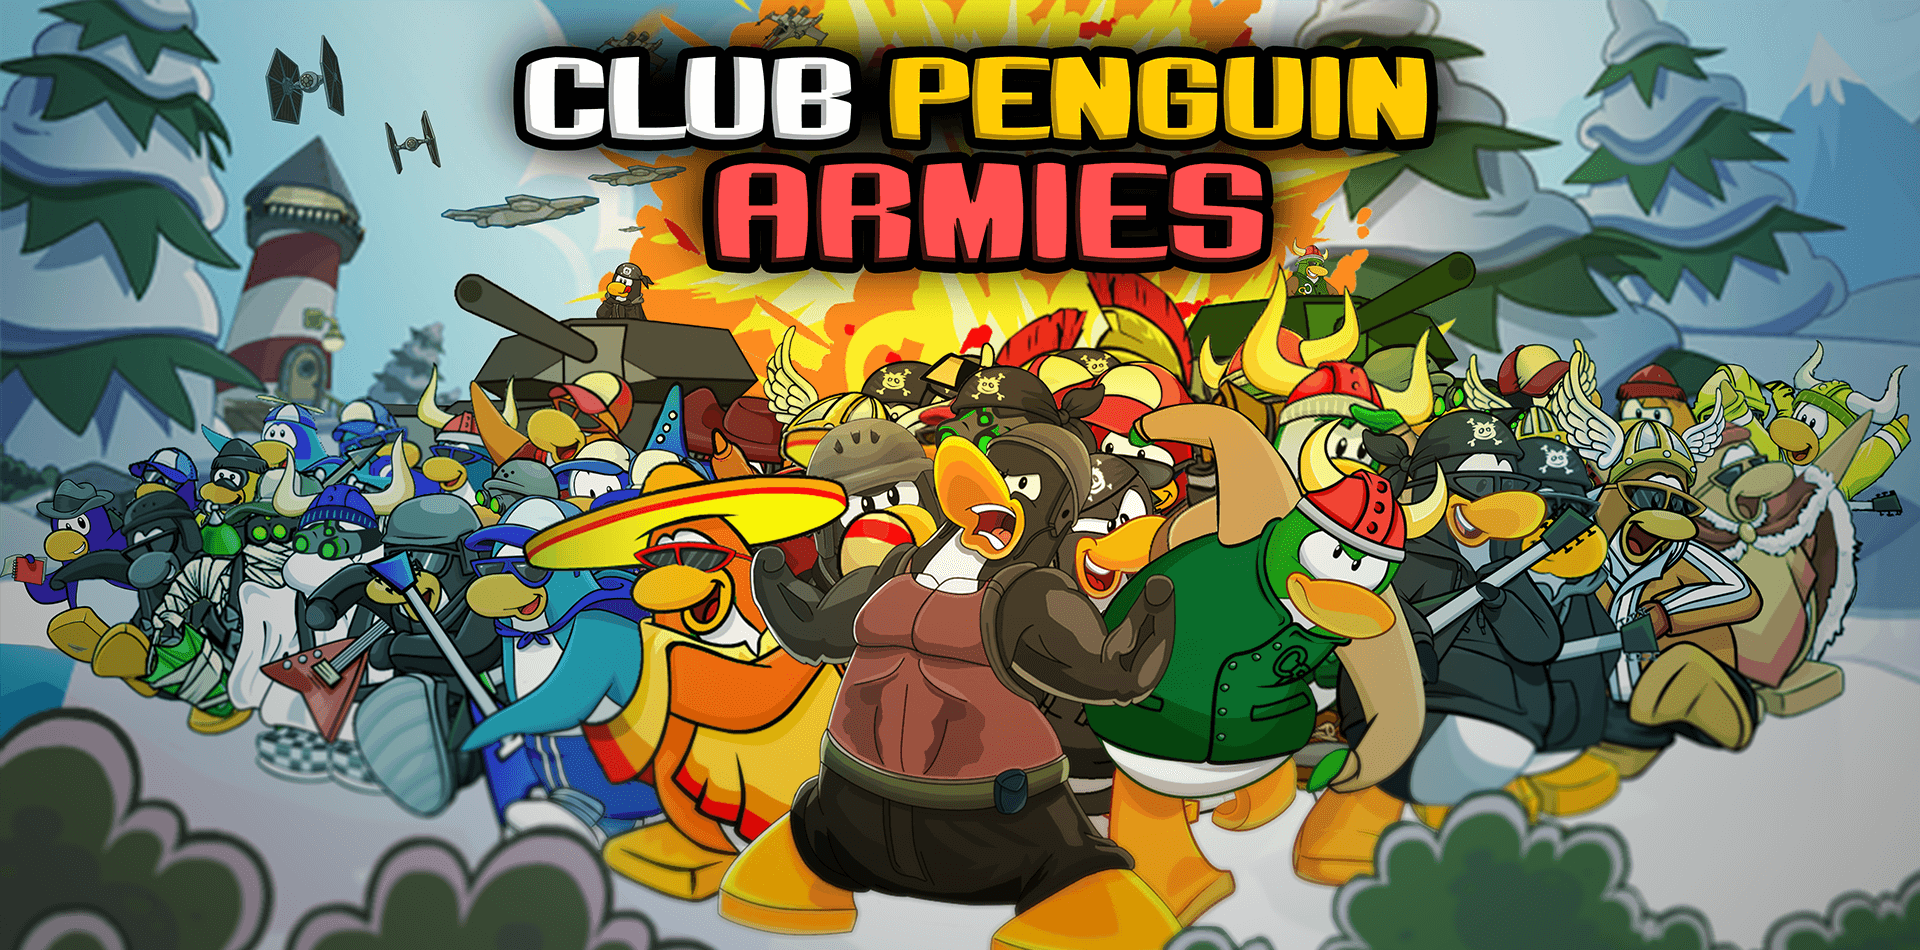 Pandito Archives » Club Penguin Armies - The Premier Club Penguin Army  League & Media Organization